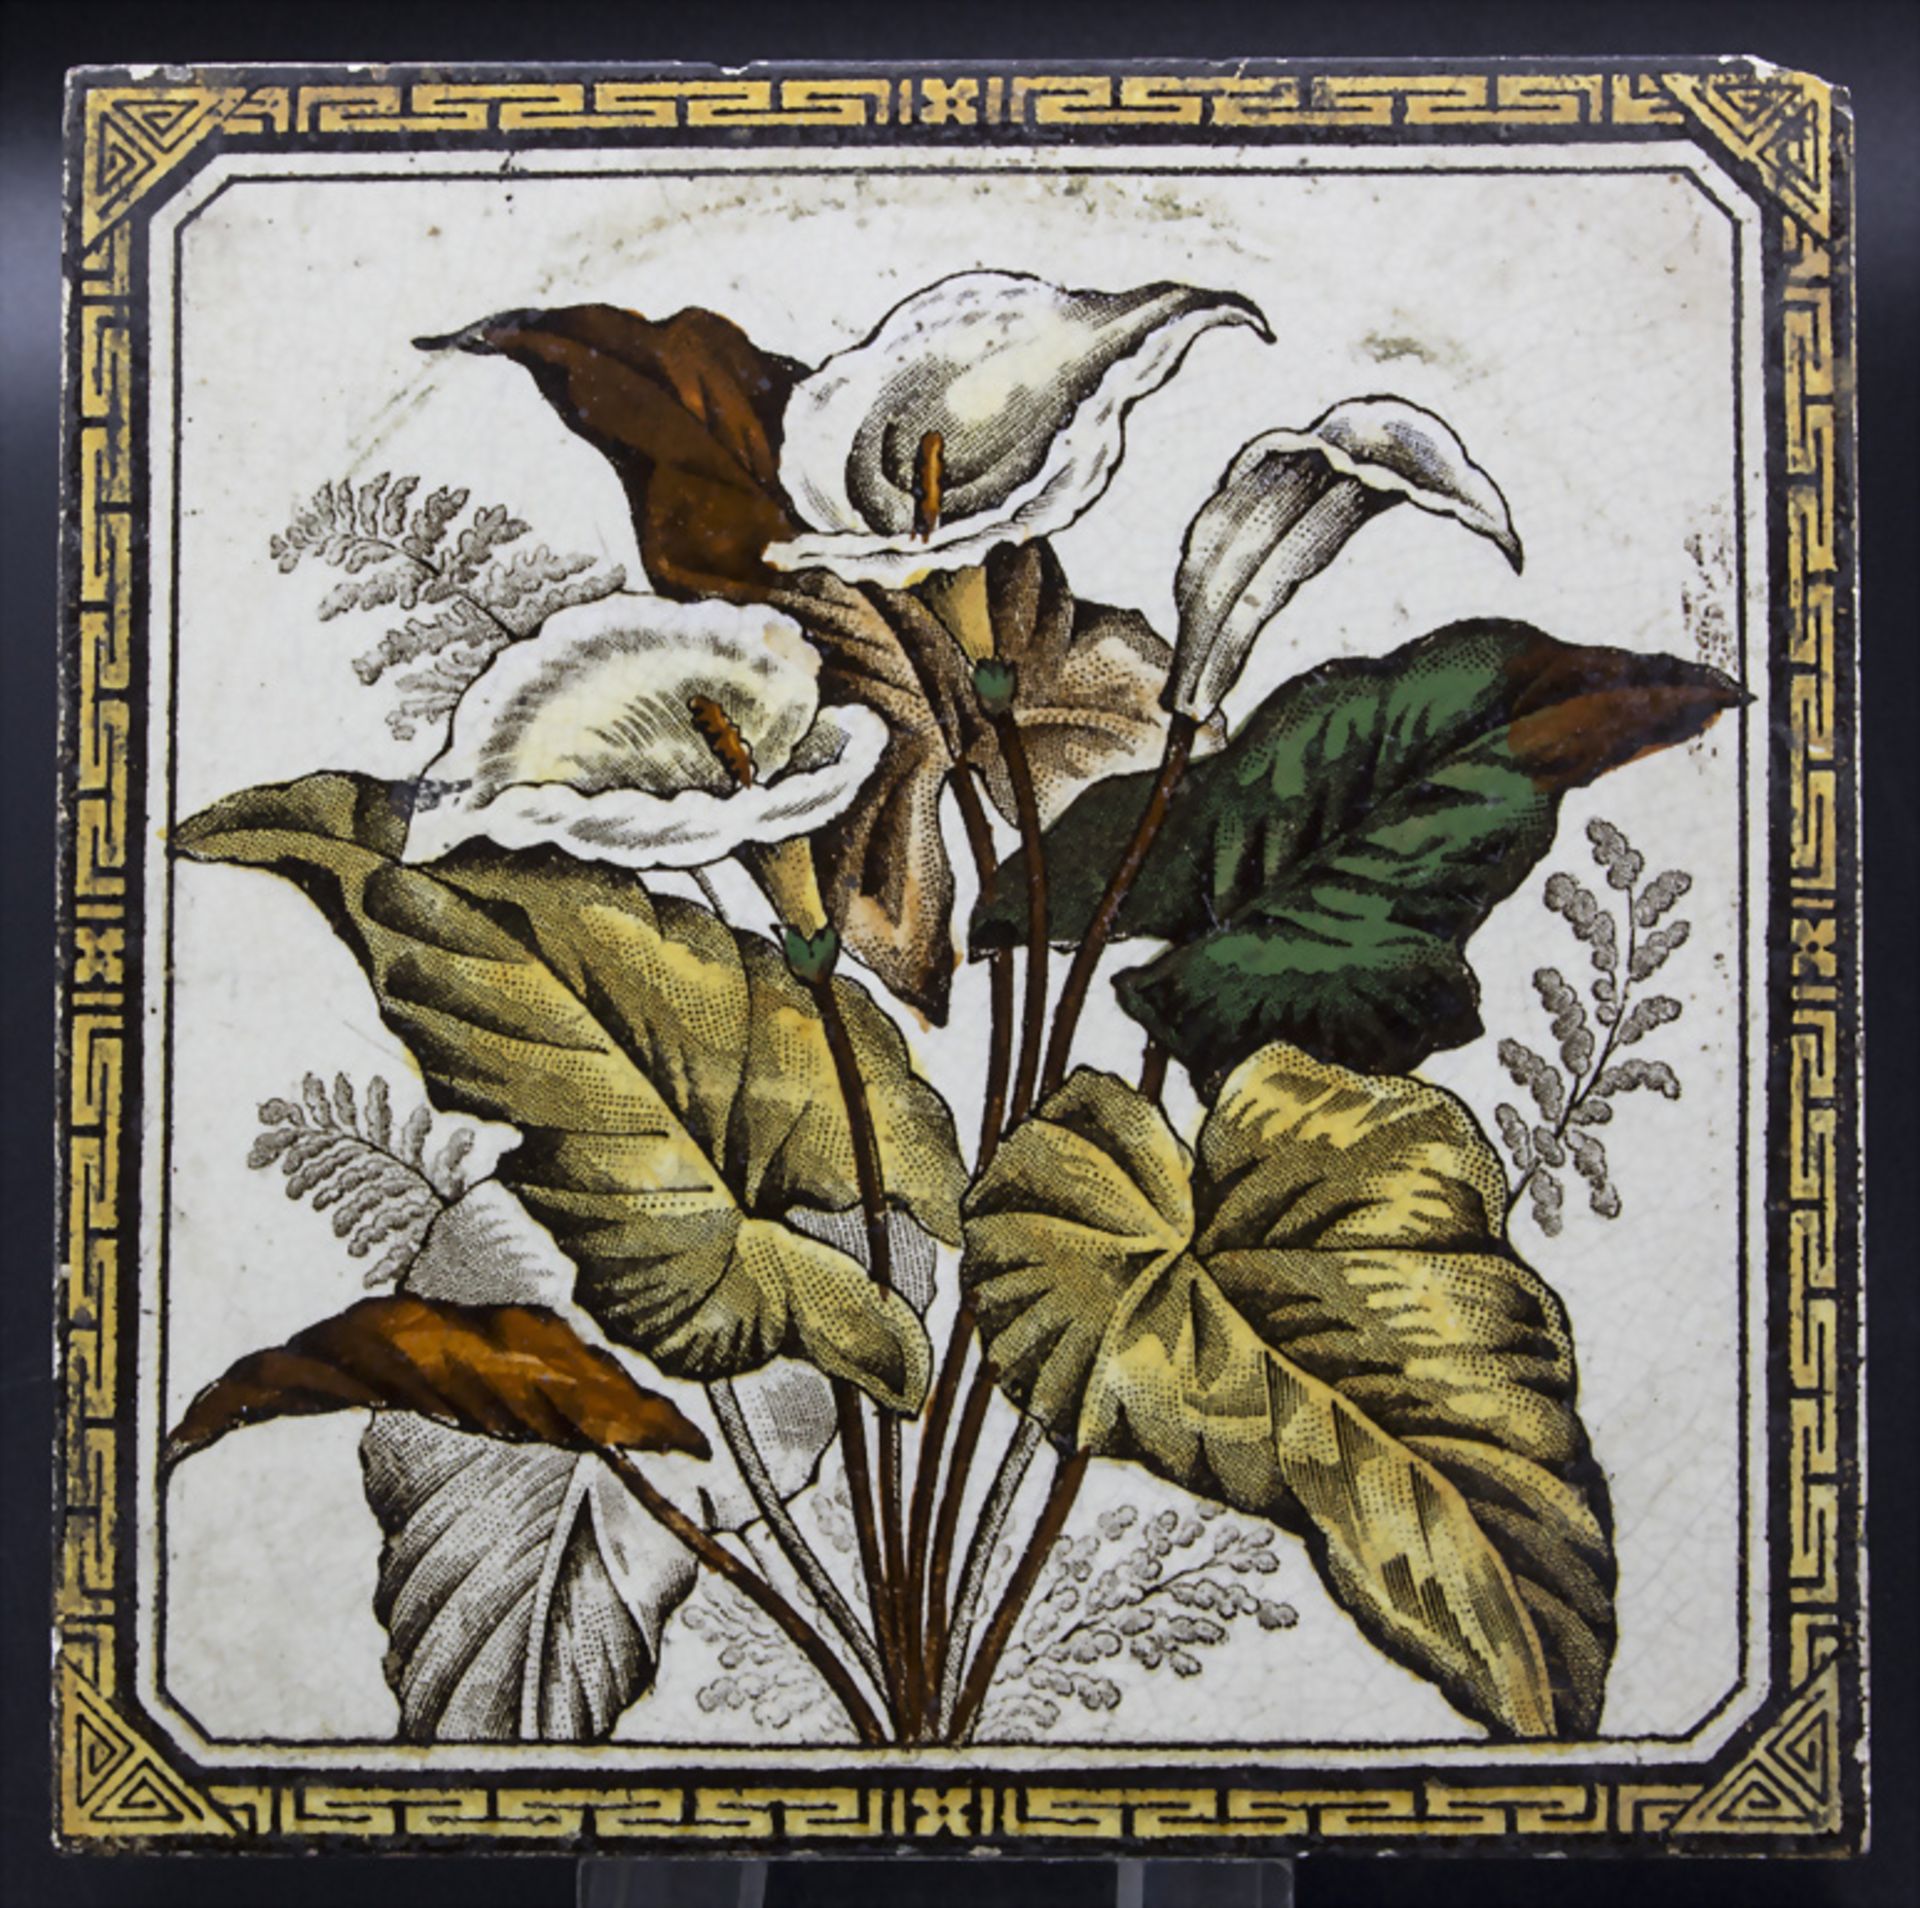 Viktorianische Kachel mit floralem Dekor / A Victorian tile with floral decor, England, 19. Jh.